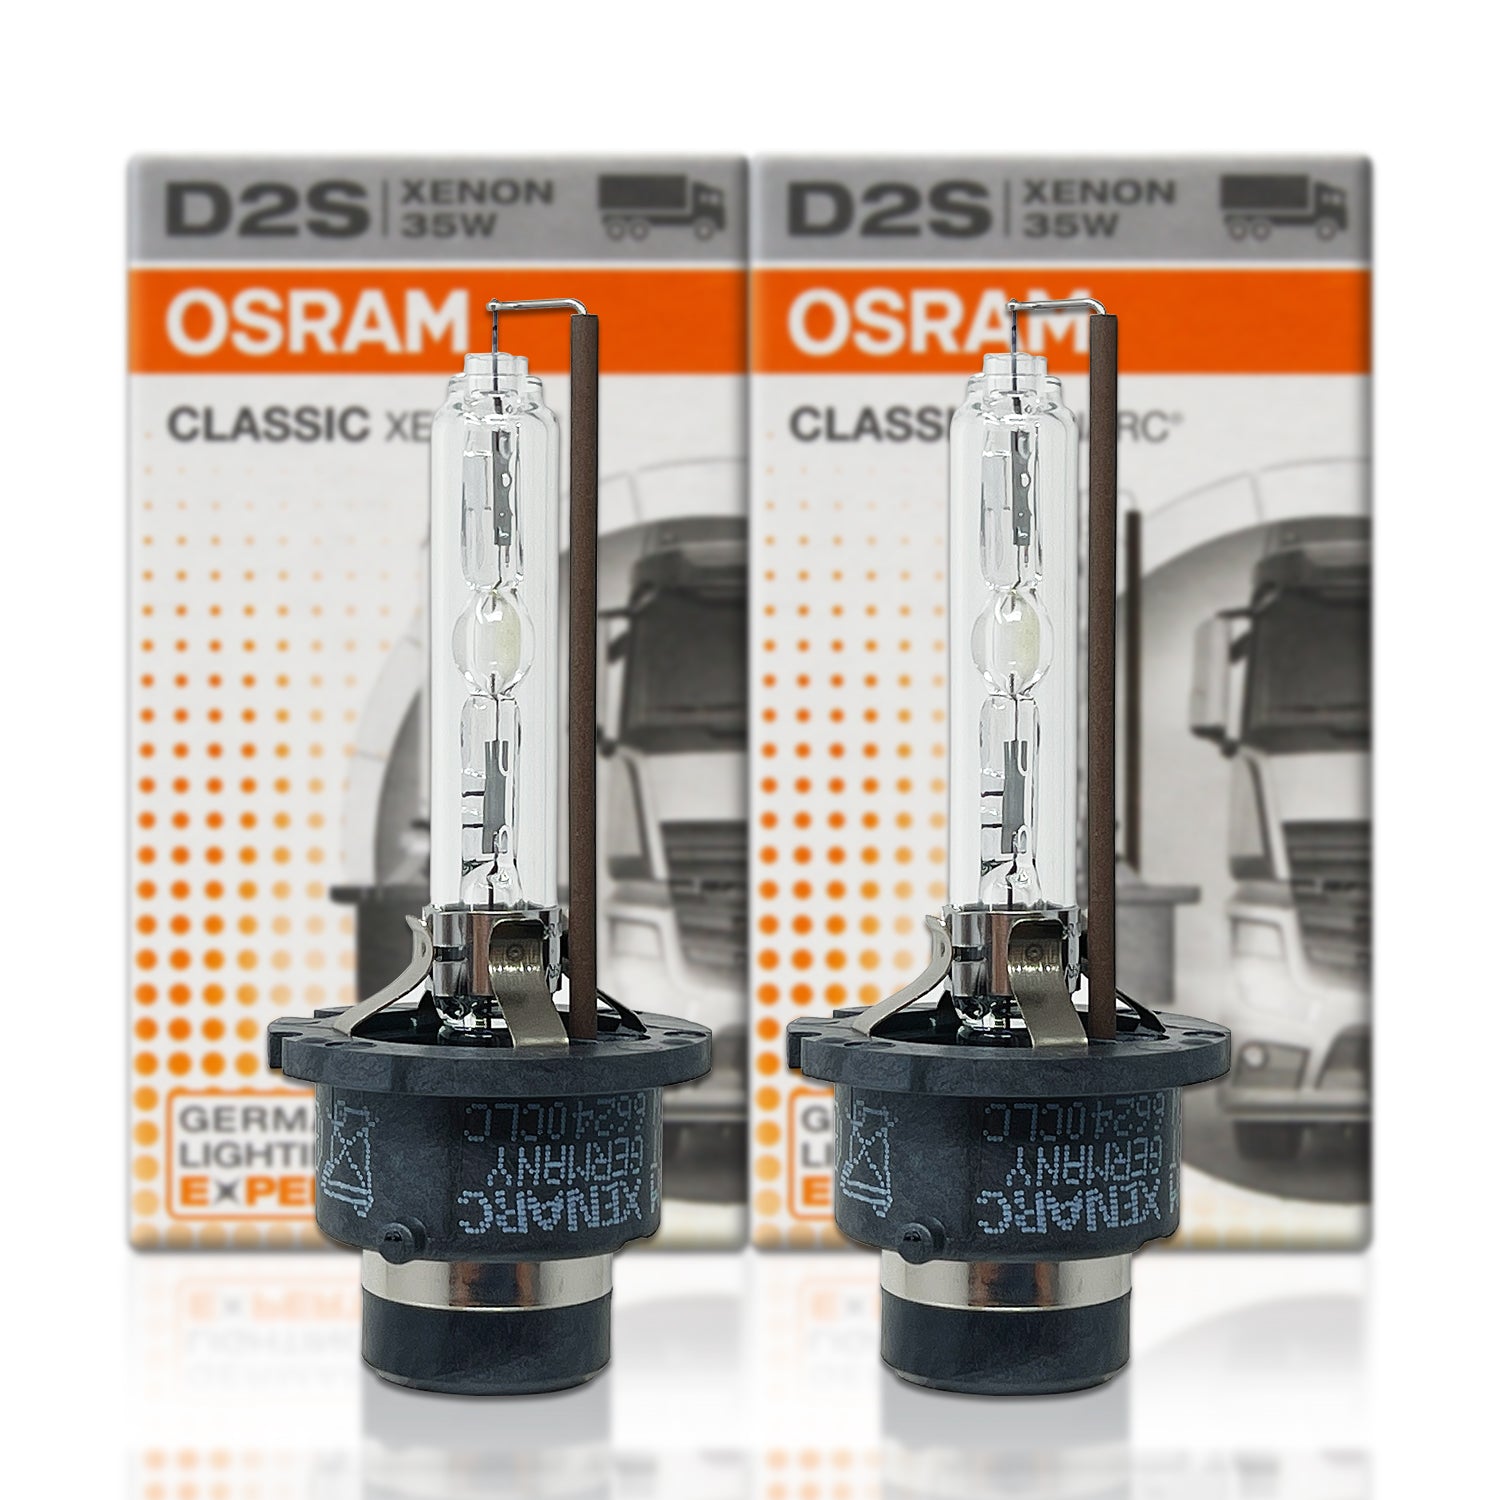 Osram D3S OEM HID Xenon Bulb 4300K – HID CONCEPT